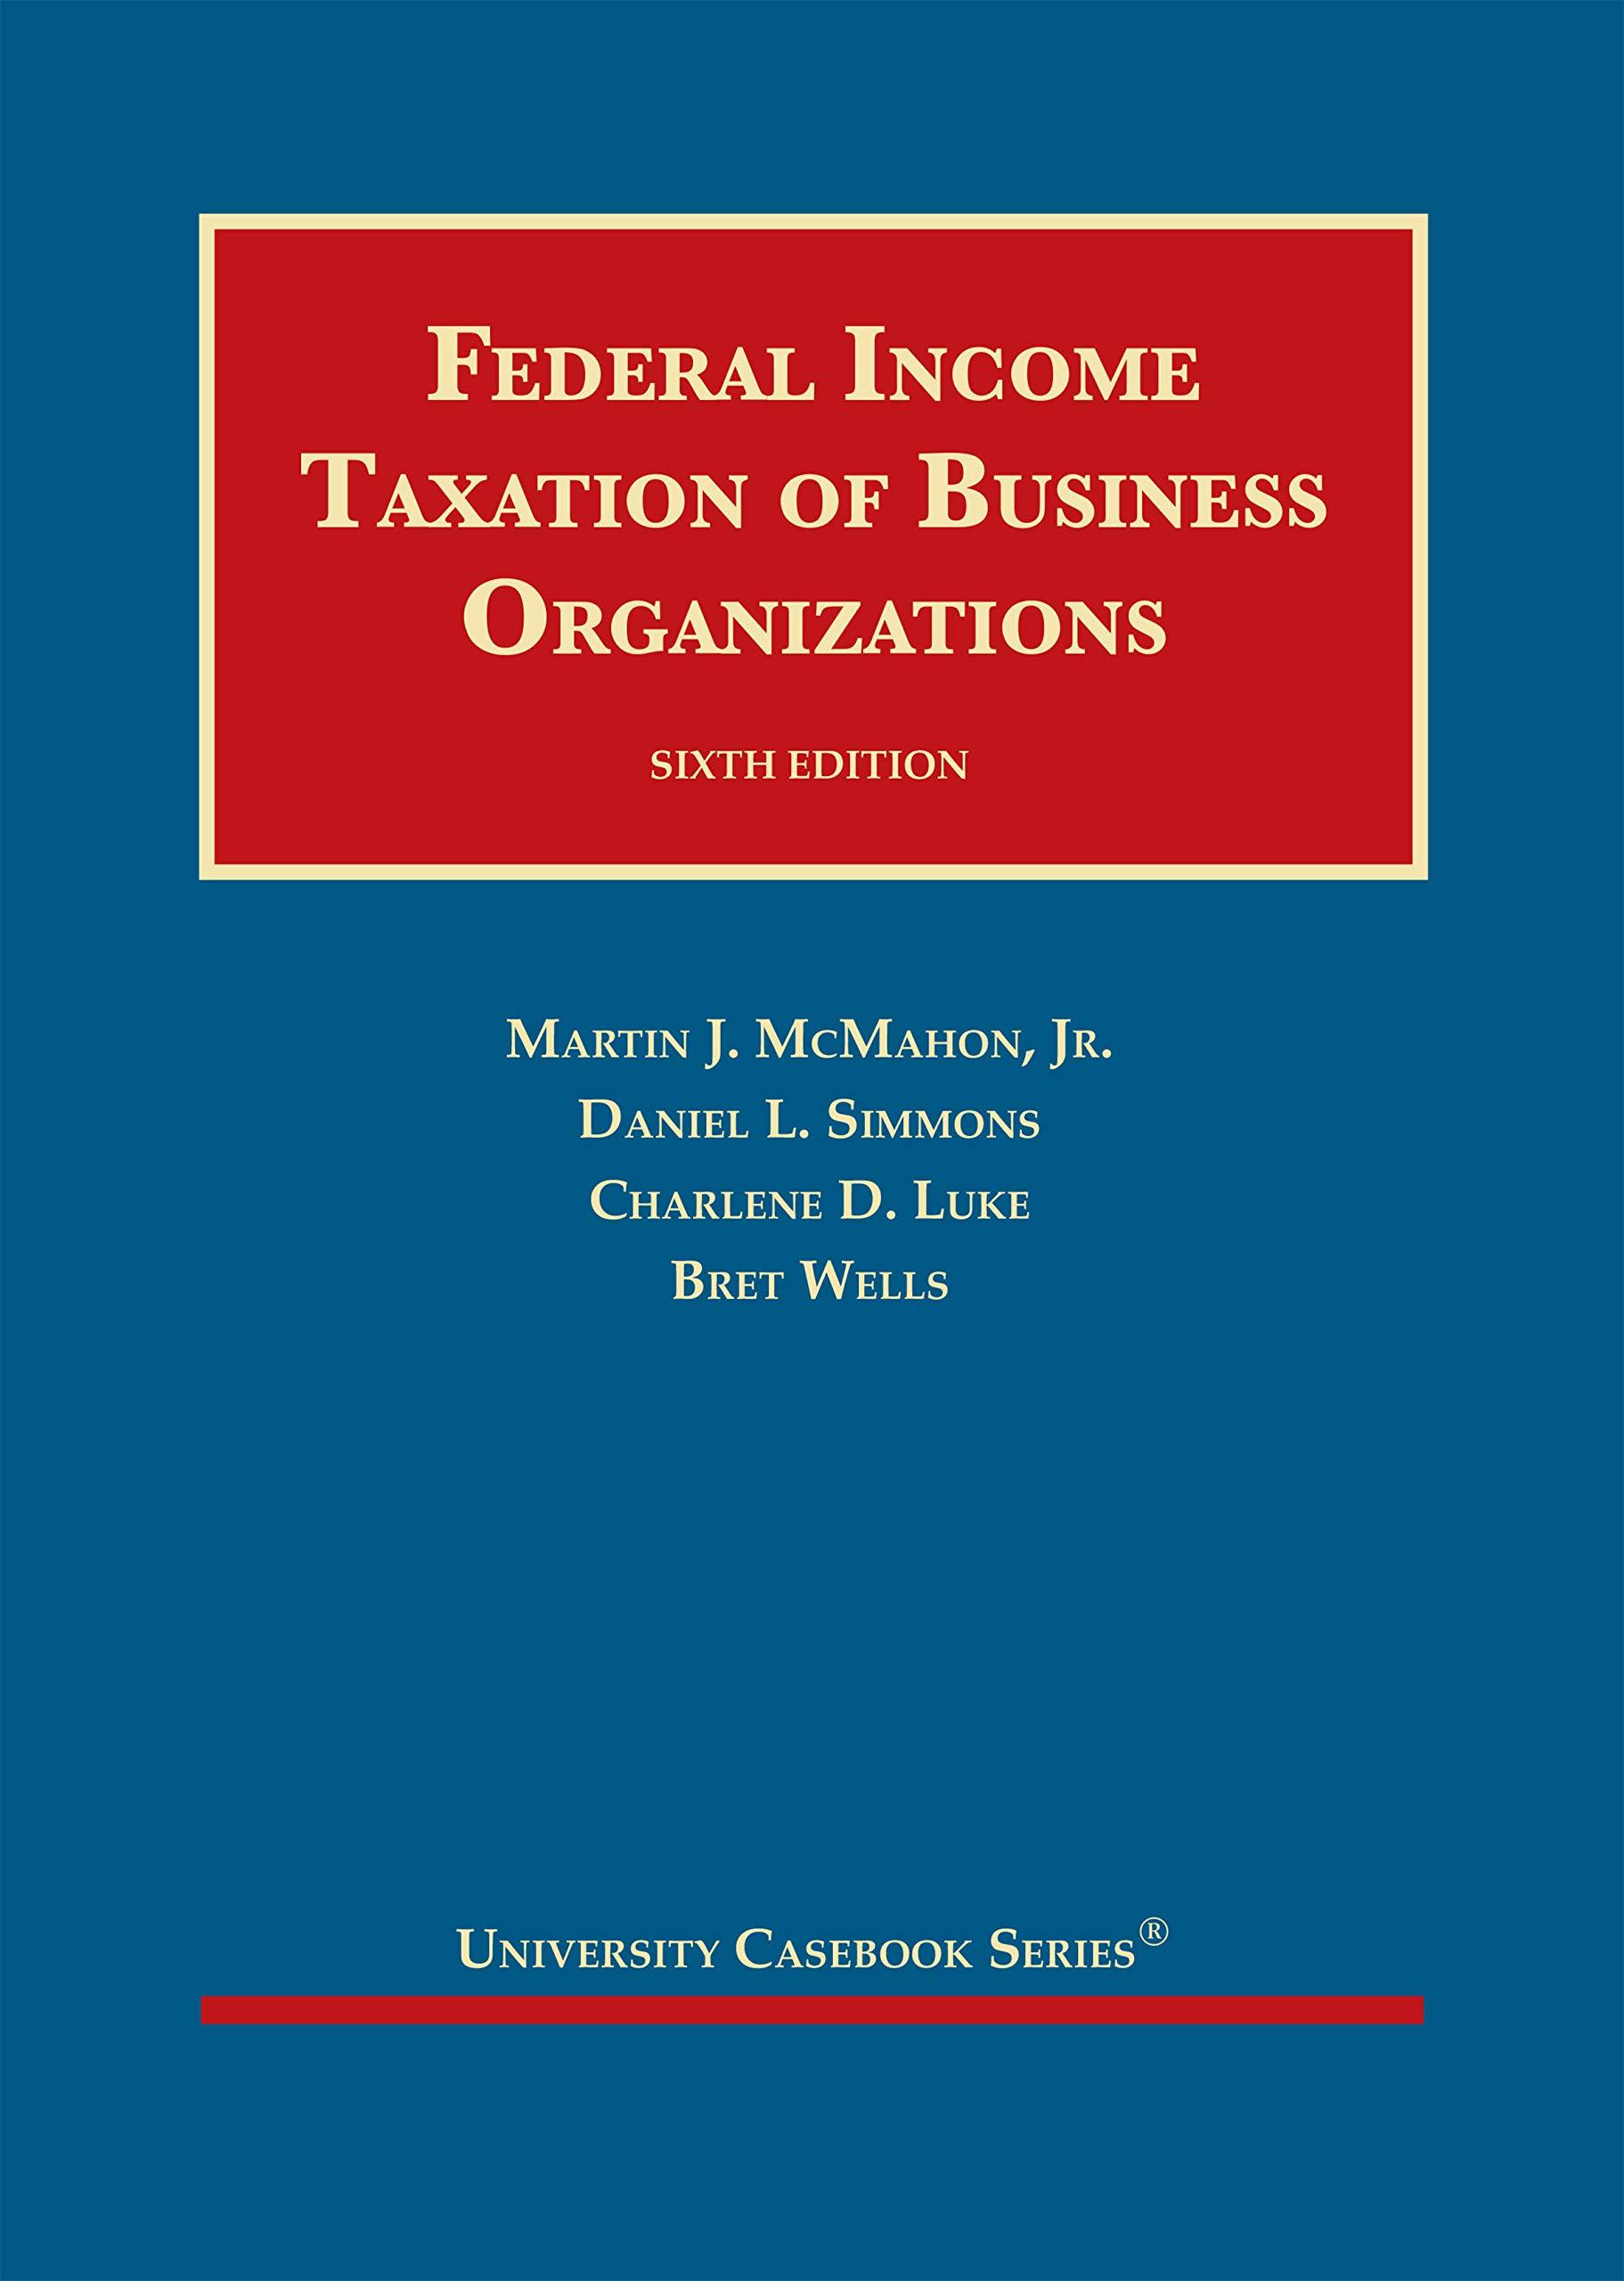 federal income taxation of business organizations 6th edition martin mcmahon, daniel simmons, charlene luke,